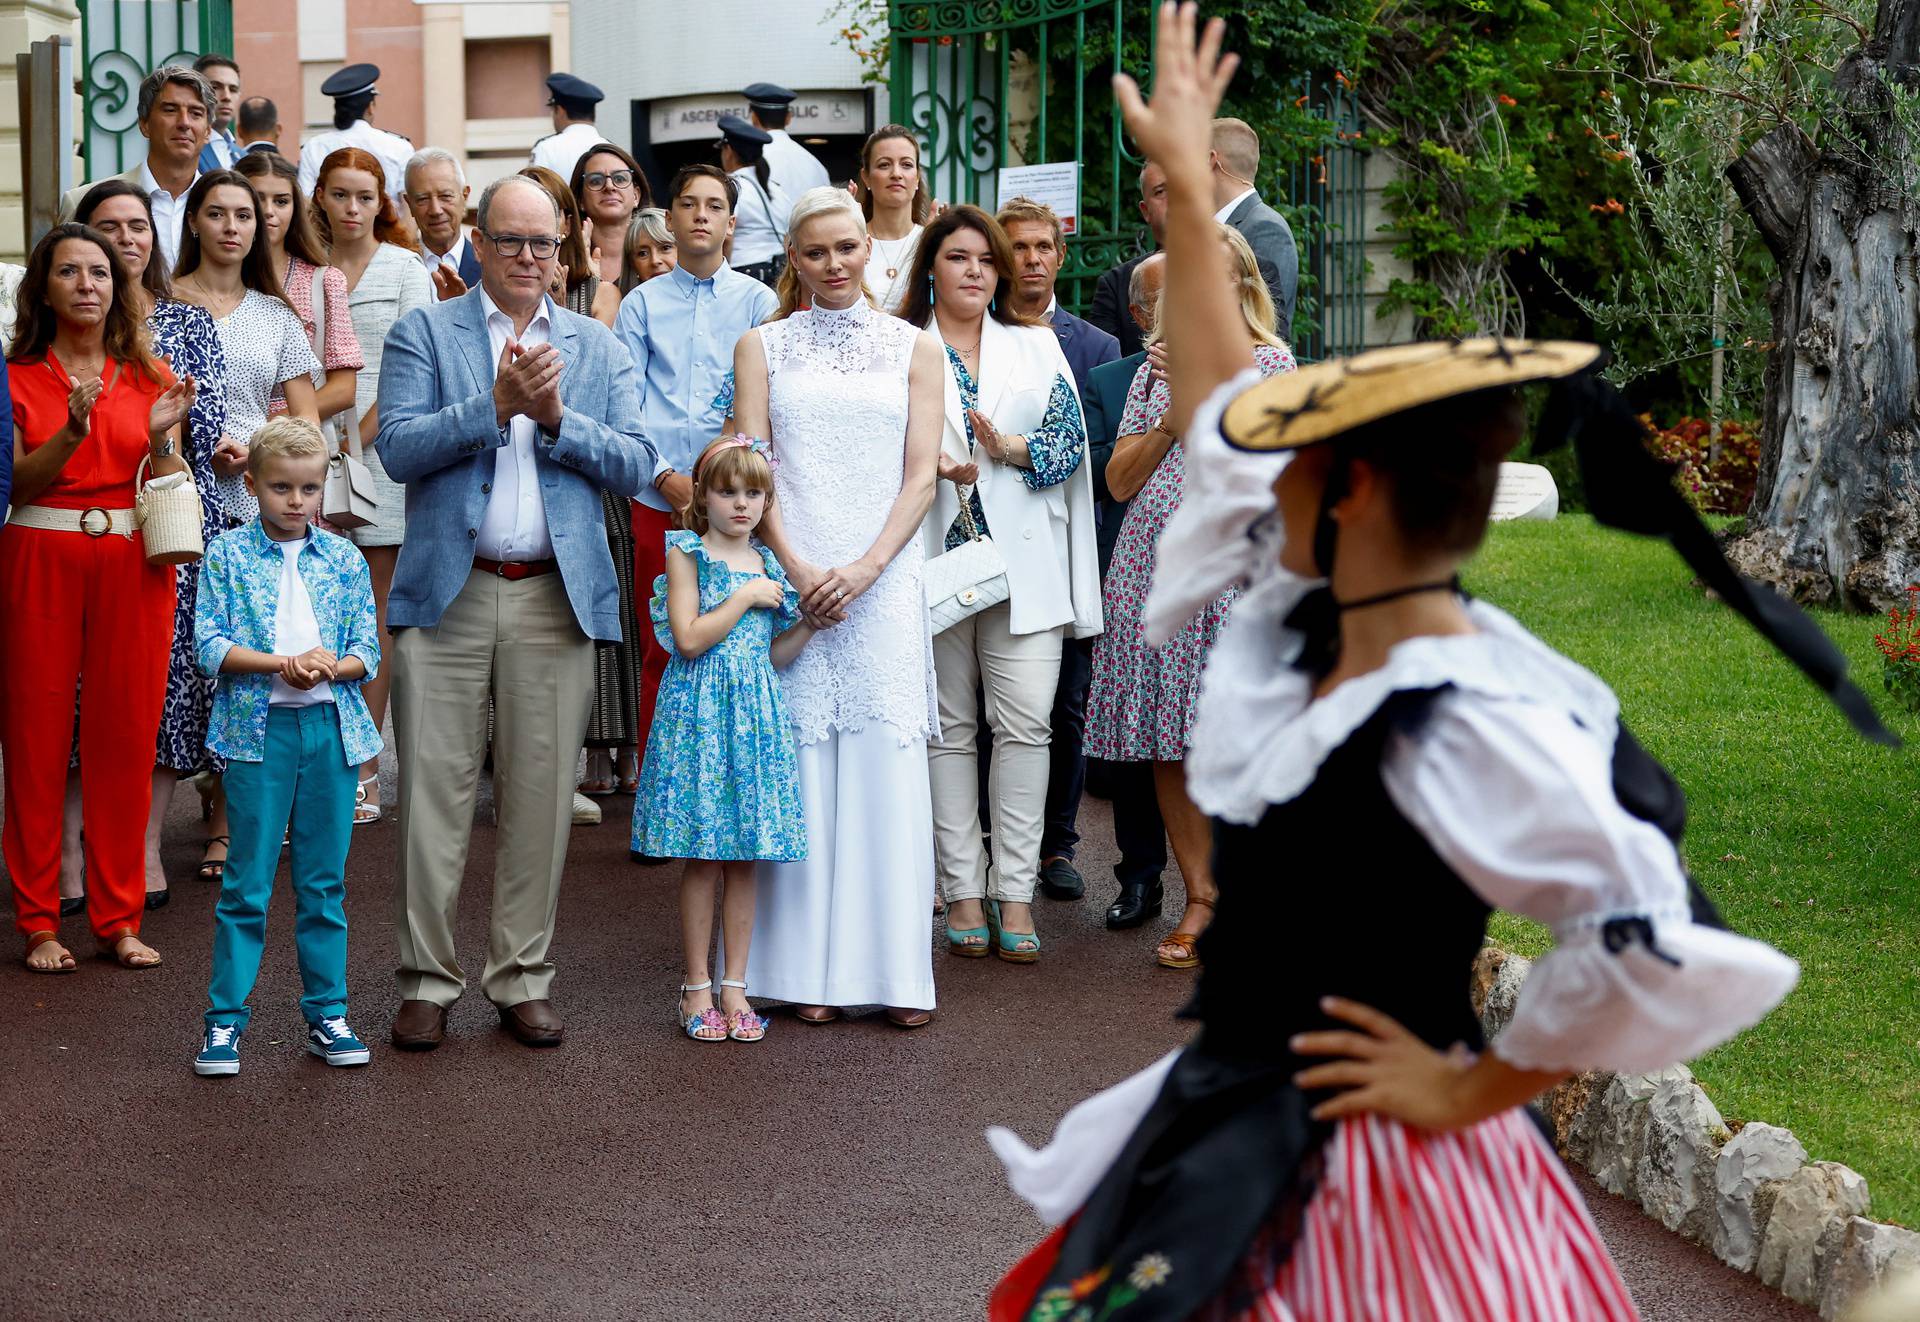 Prince Albert II of Monaco takes part in the traditional Monaco picnic, in Monaco